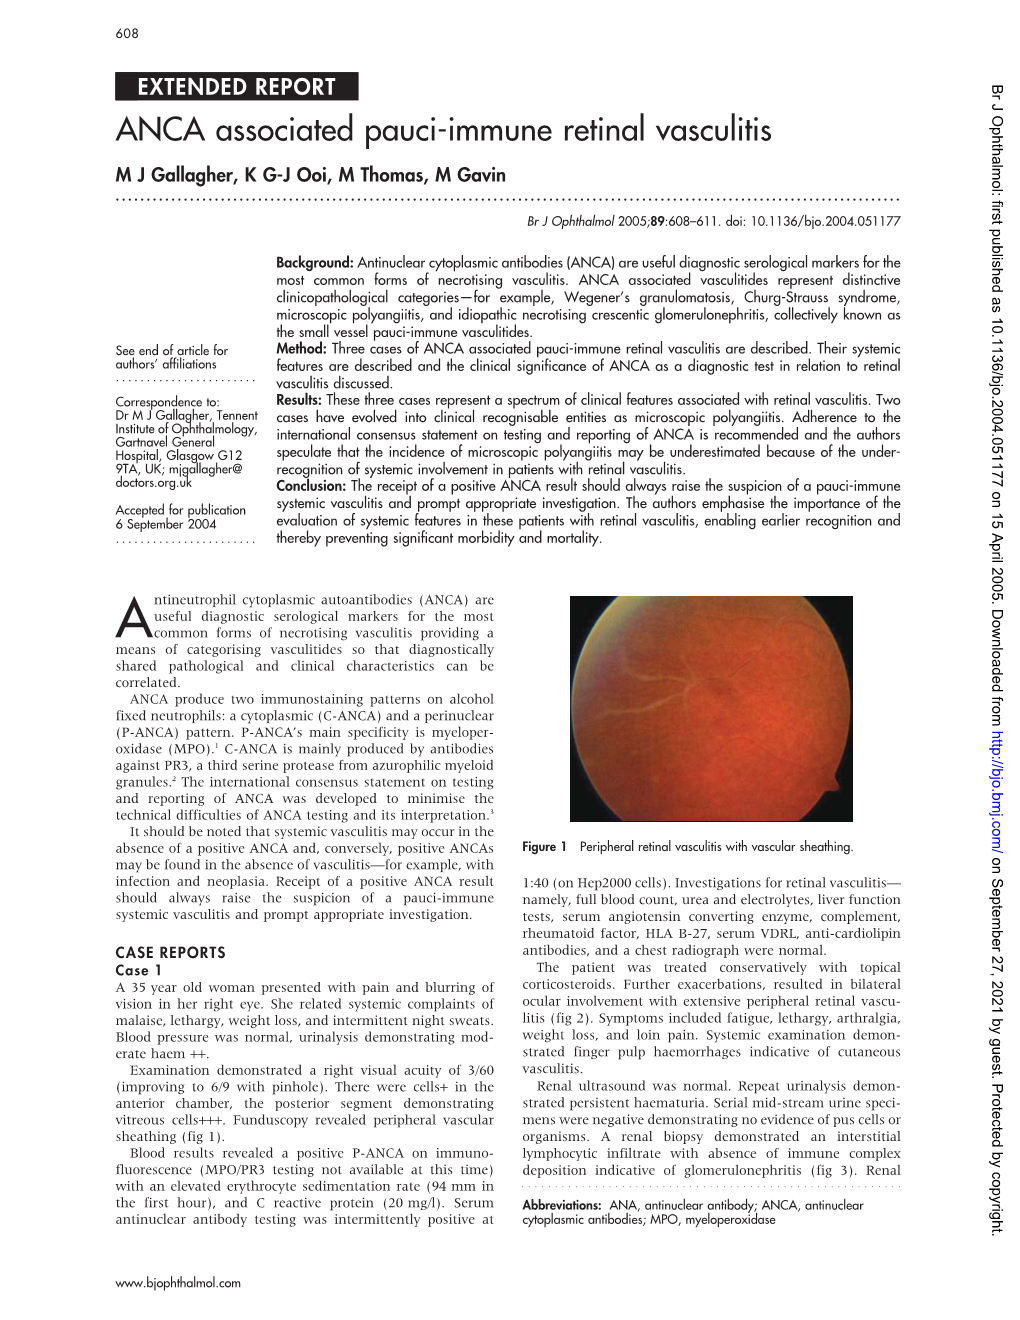 ANCA Associated Pauci-Immune Retinal Vasculitis M J Gallagher, K G-J Ooi, M Thomas, M Gavin